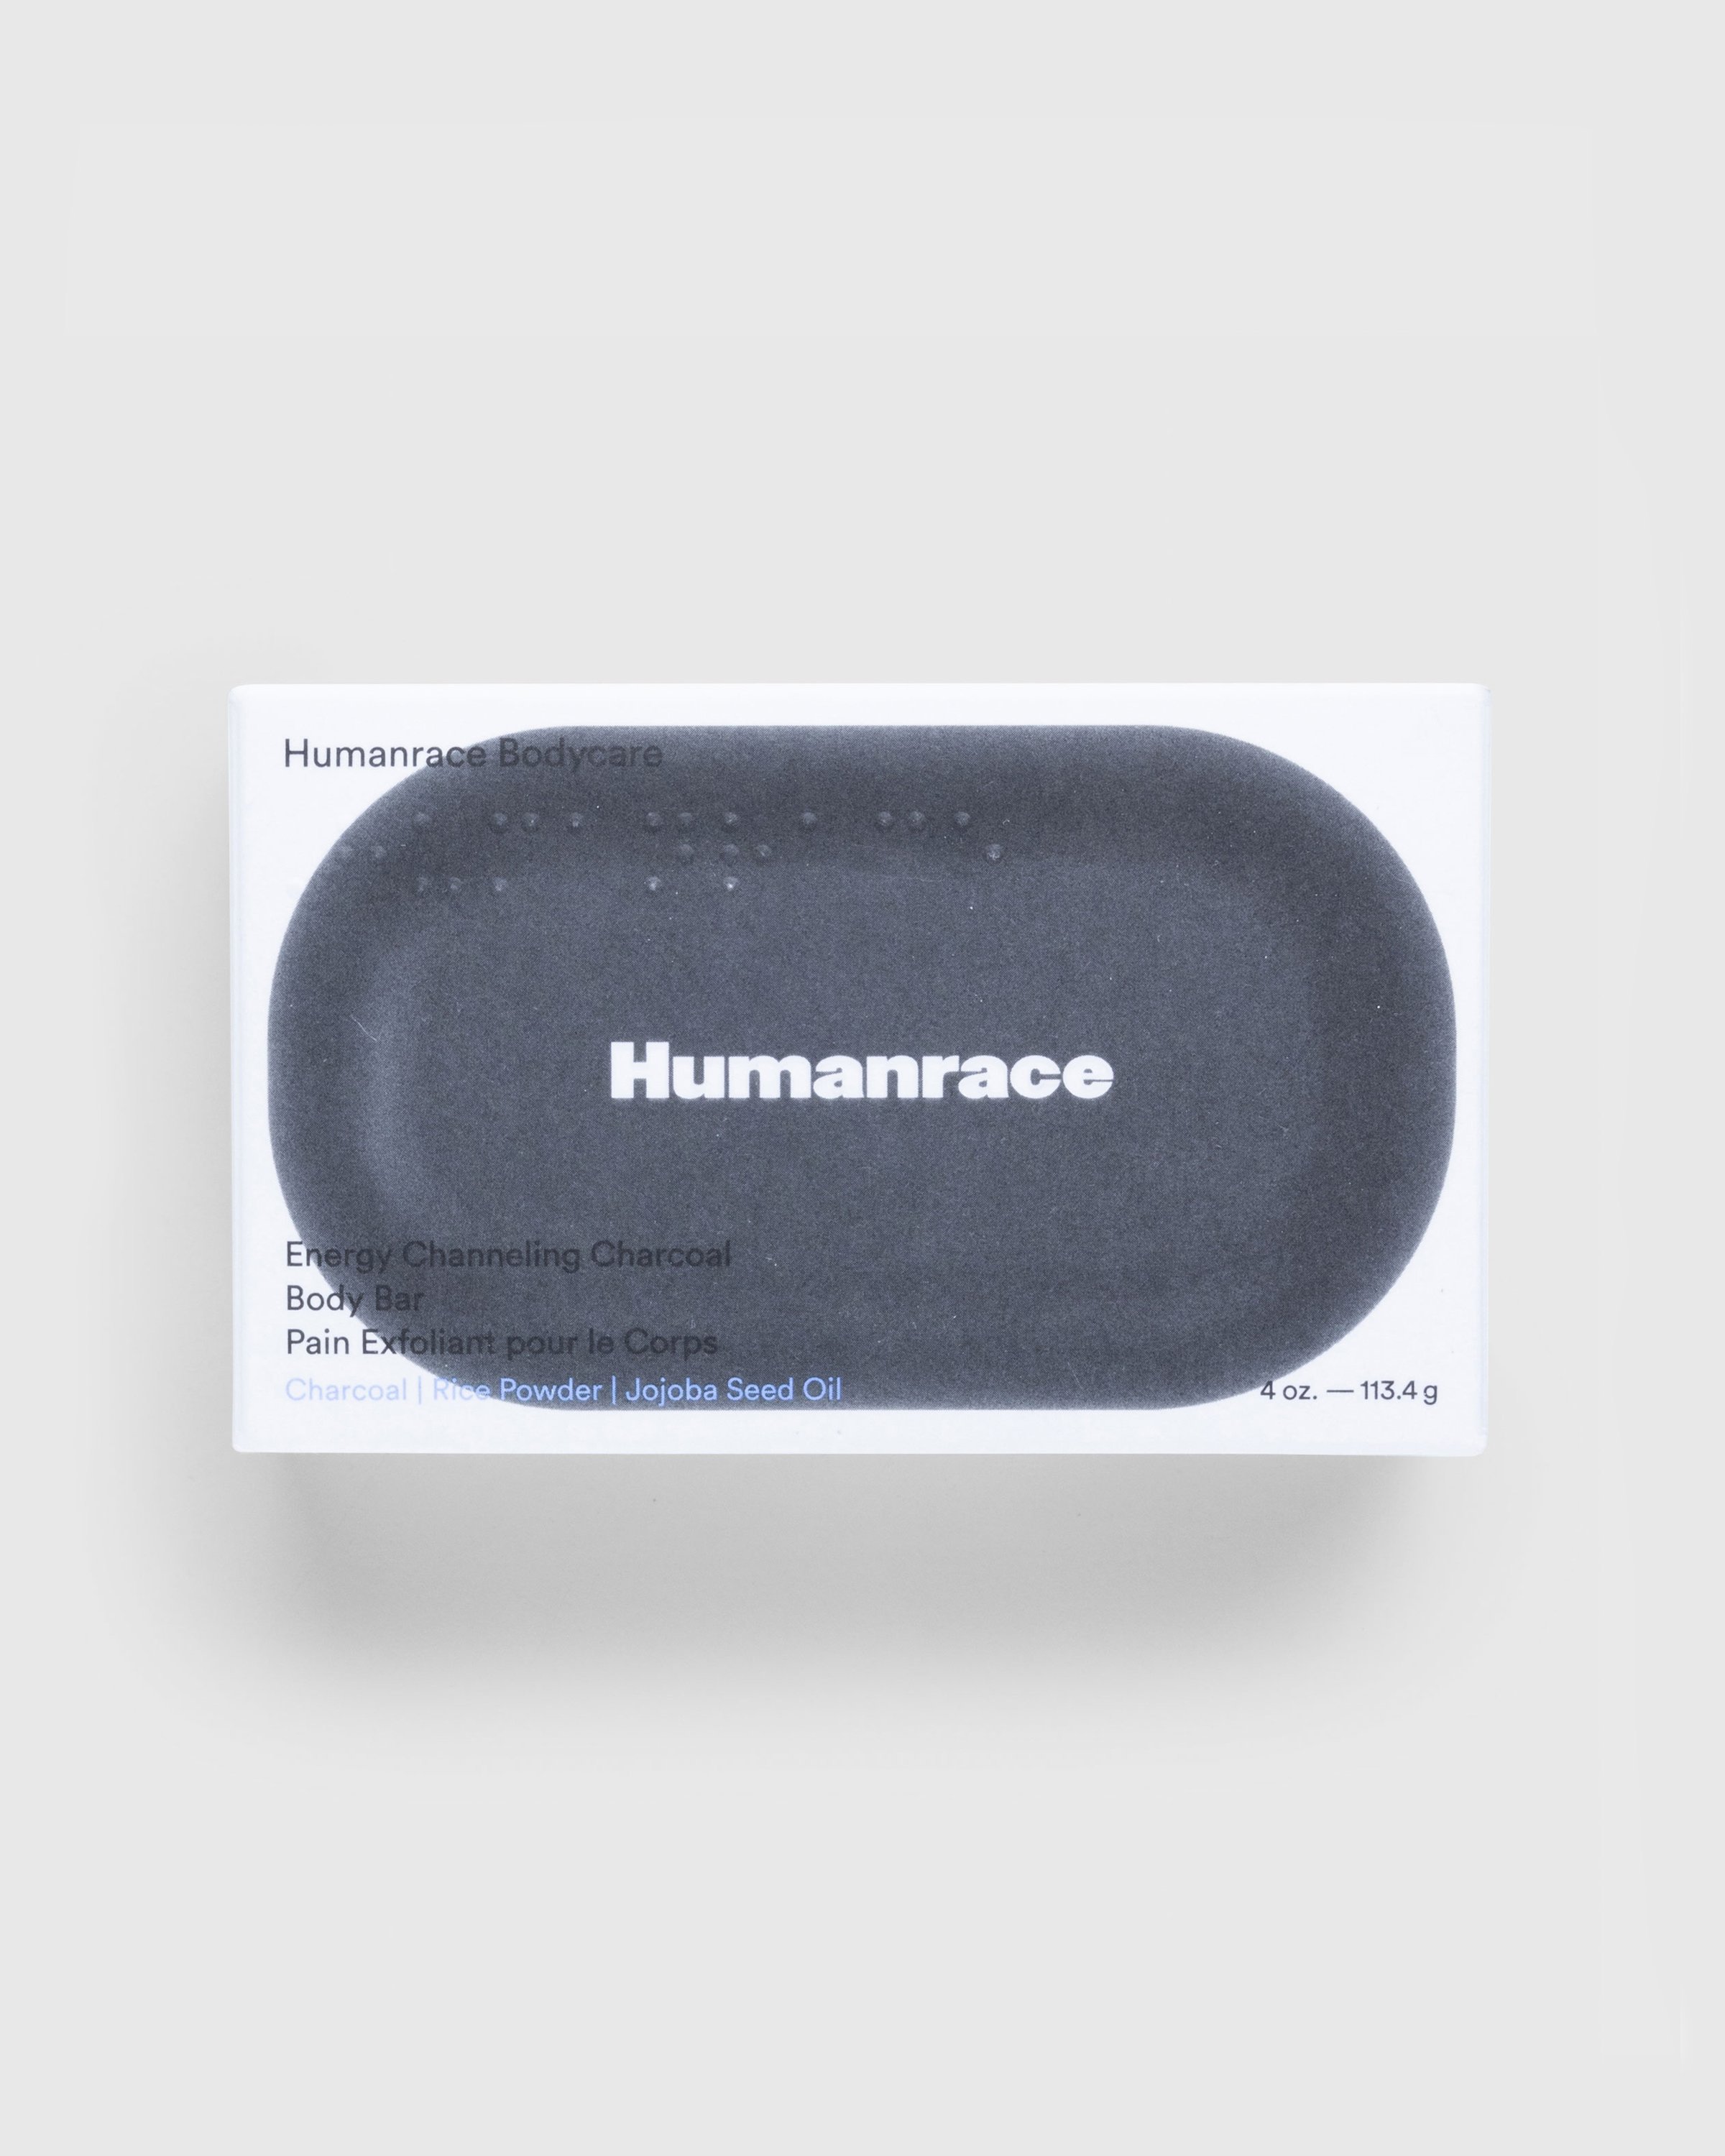 Humanrace - Energy Channeling Charcoal Body Bar - Lifestyle - Black - Image 2